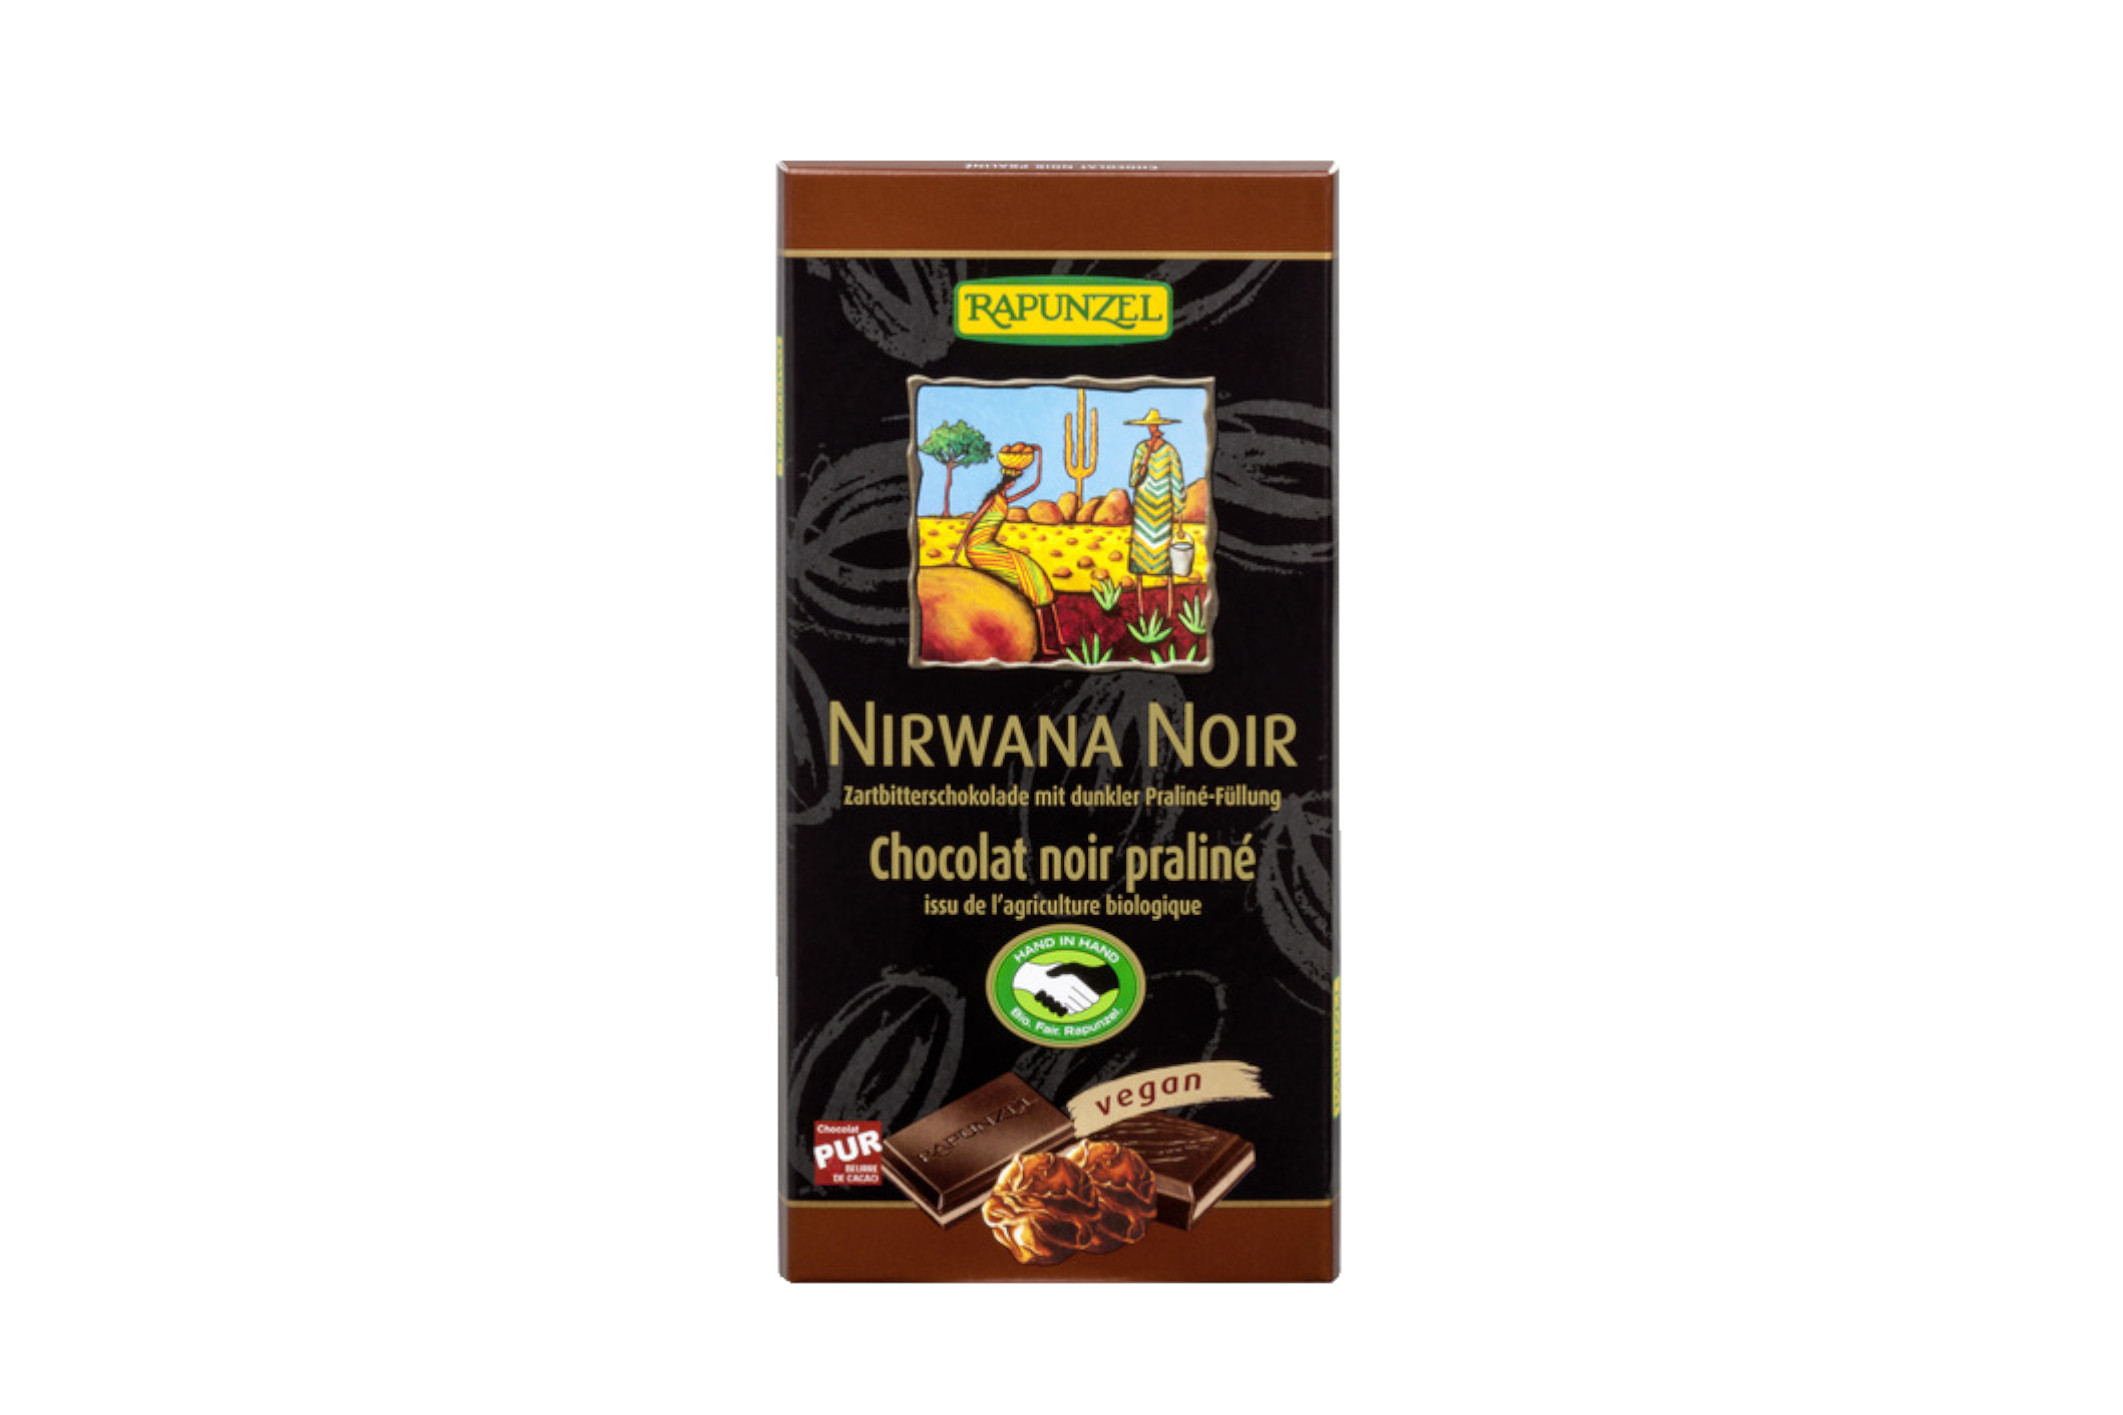 Čokoláda hořká NIRWANA NOIR s pralinkovou náplní BIO VEGAN 55% - Rapunzel 100 g